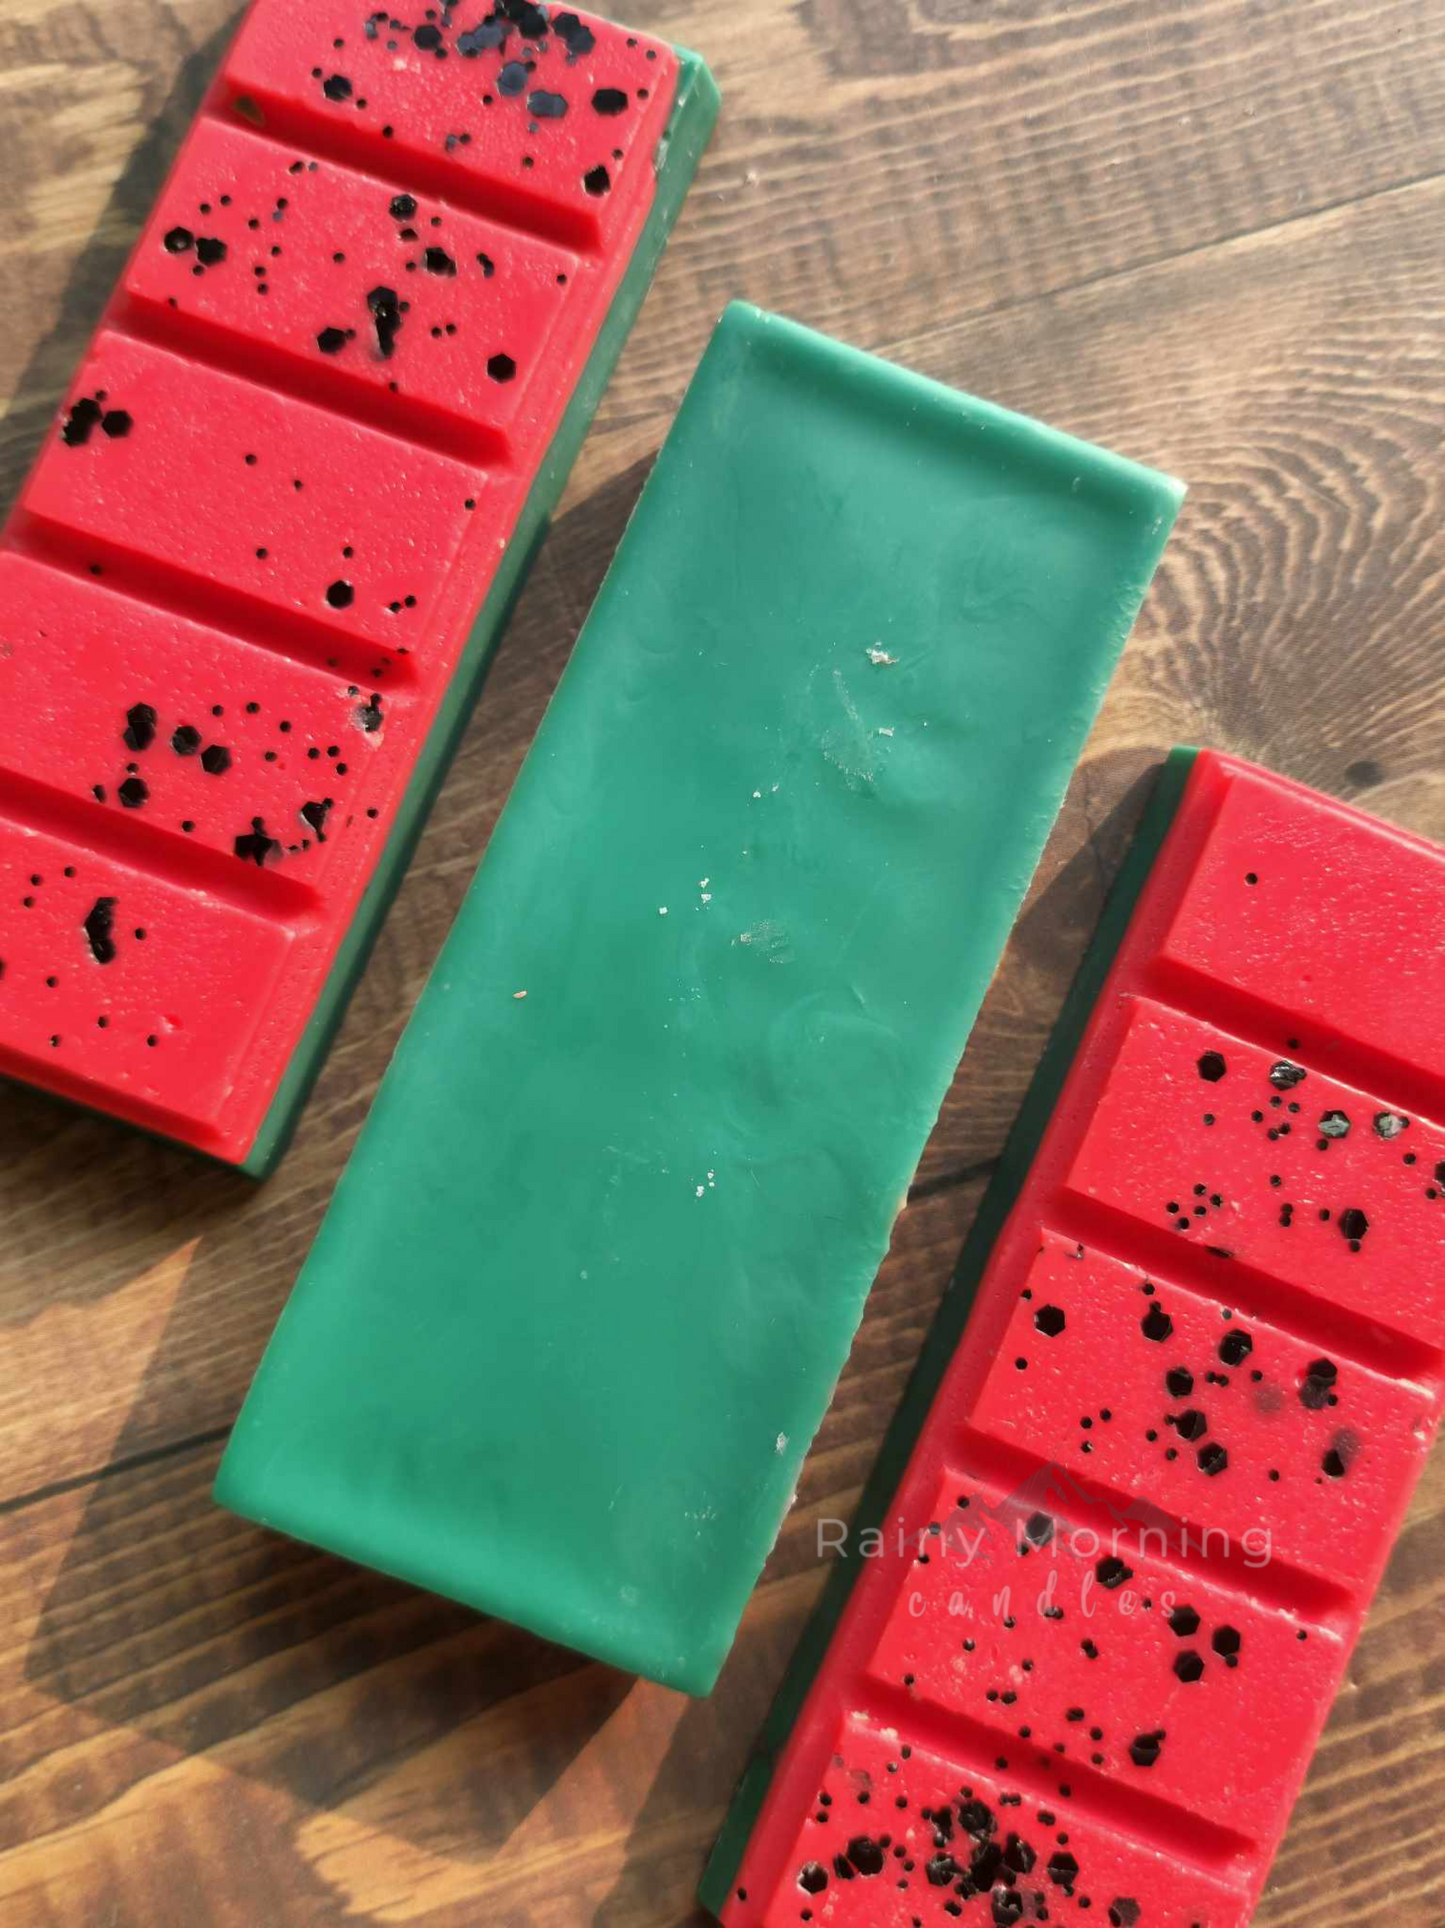 Watermelon Crawl | Summer Wax Melts